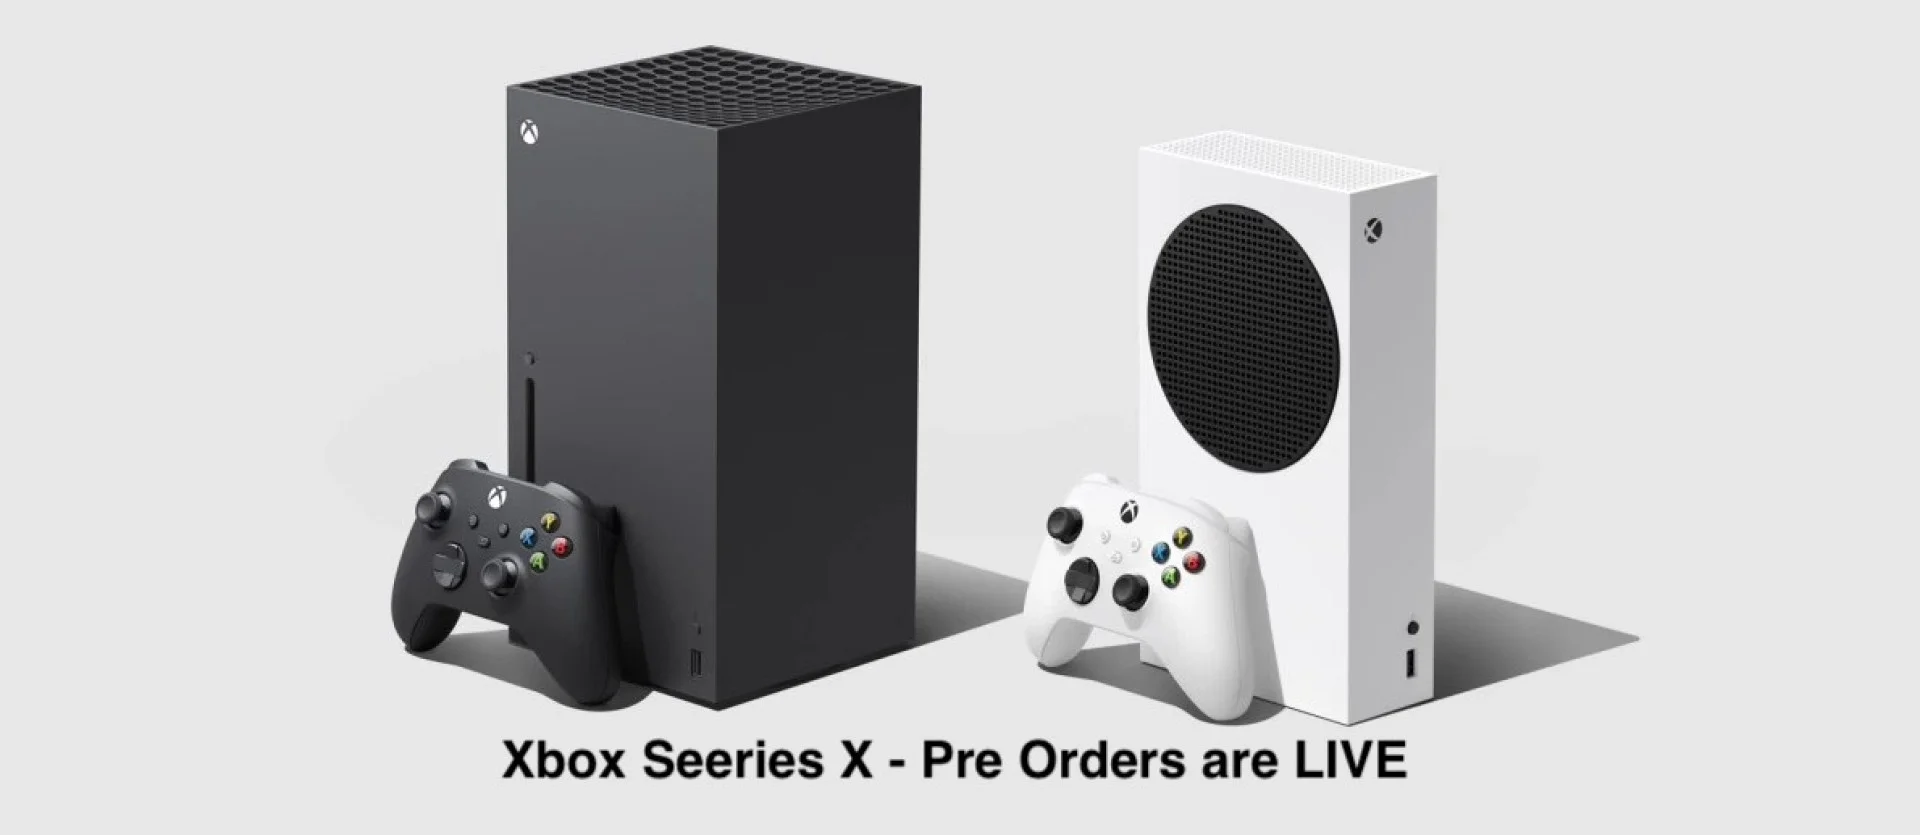 Xbox Series X - Pre Orders are Live!